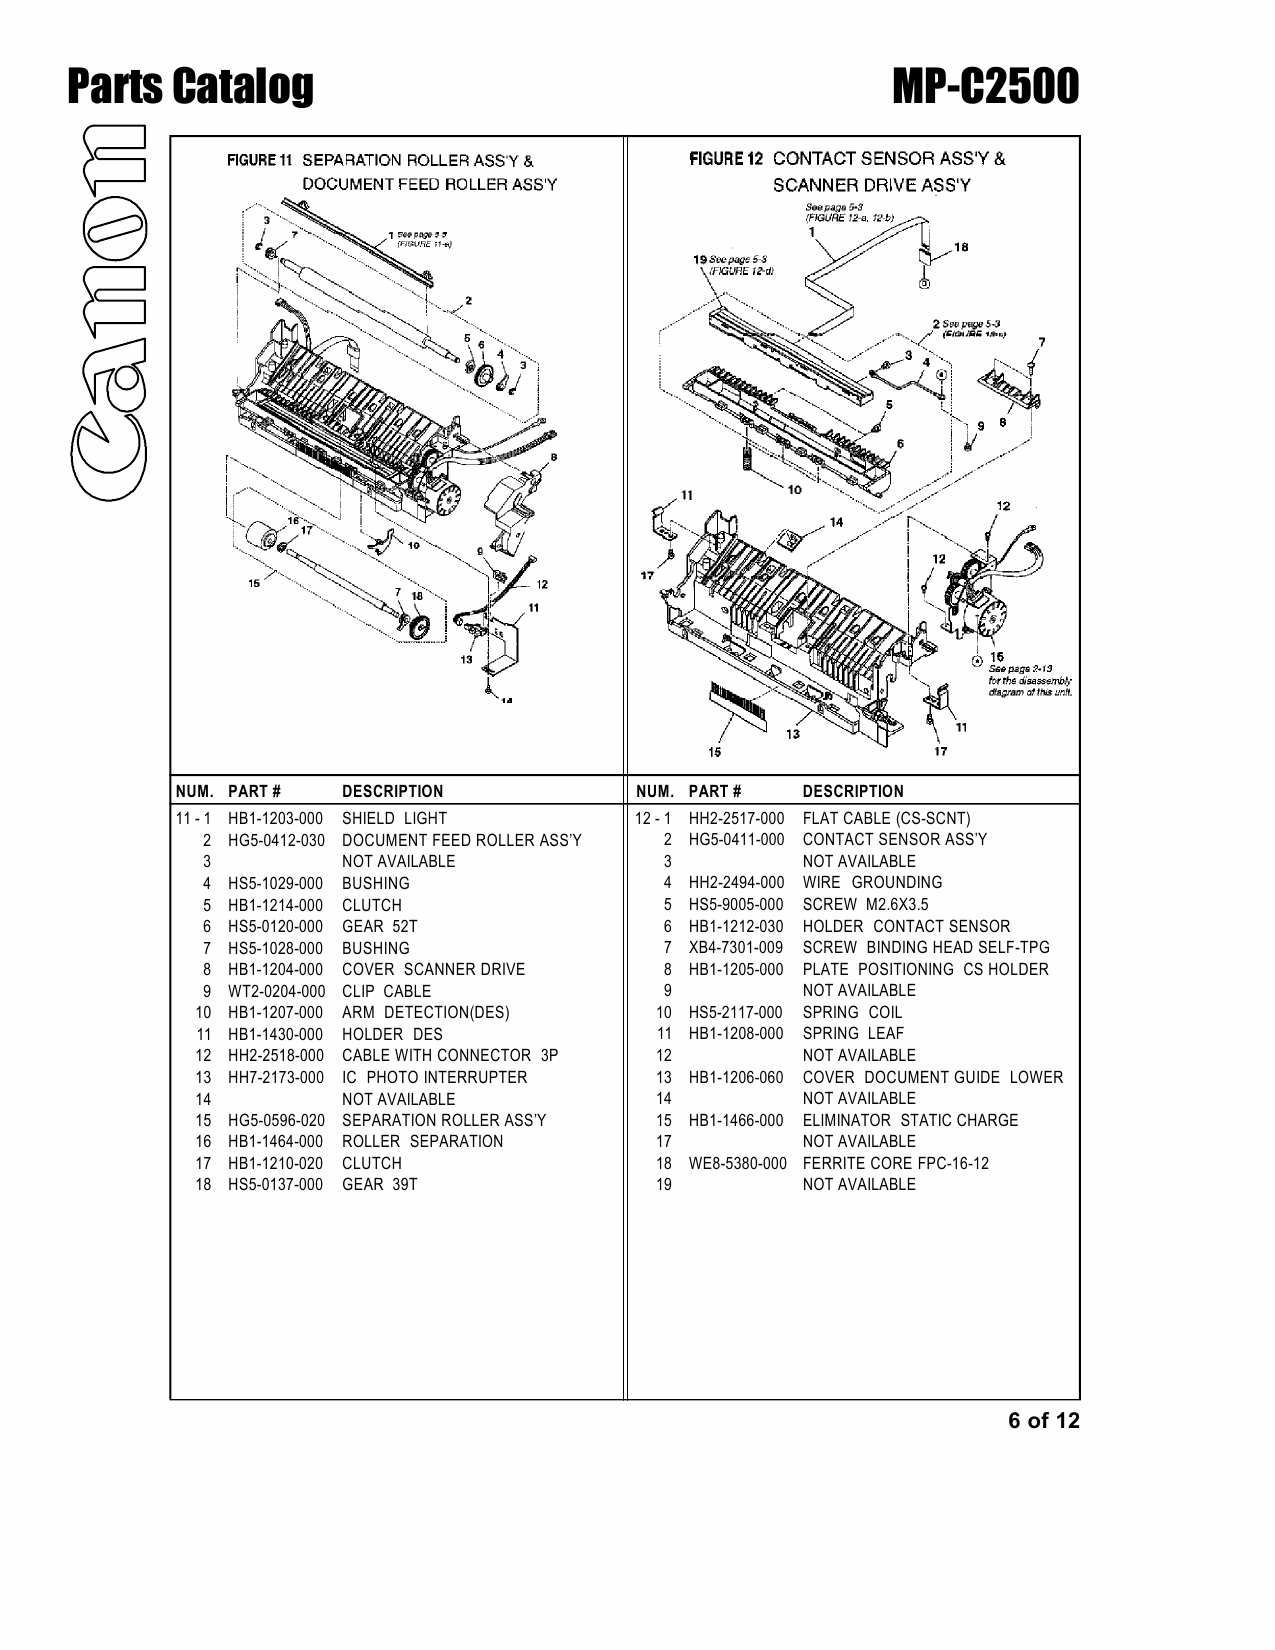 Canon MultiPASS MP-C2500 Parts Catalog Manual-6